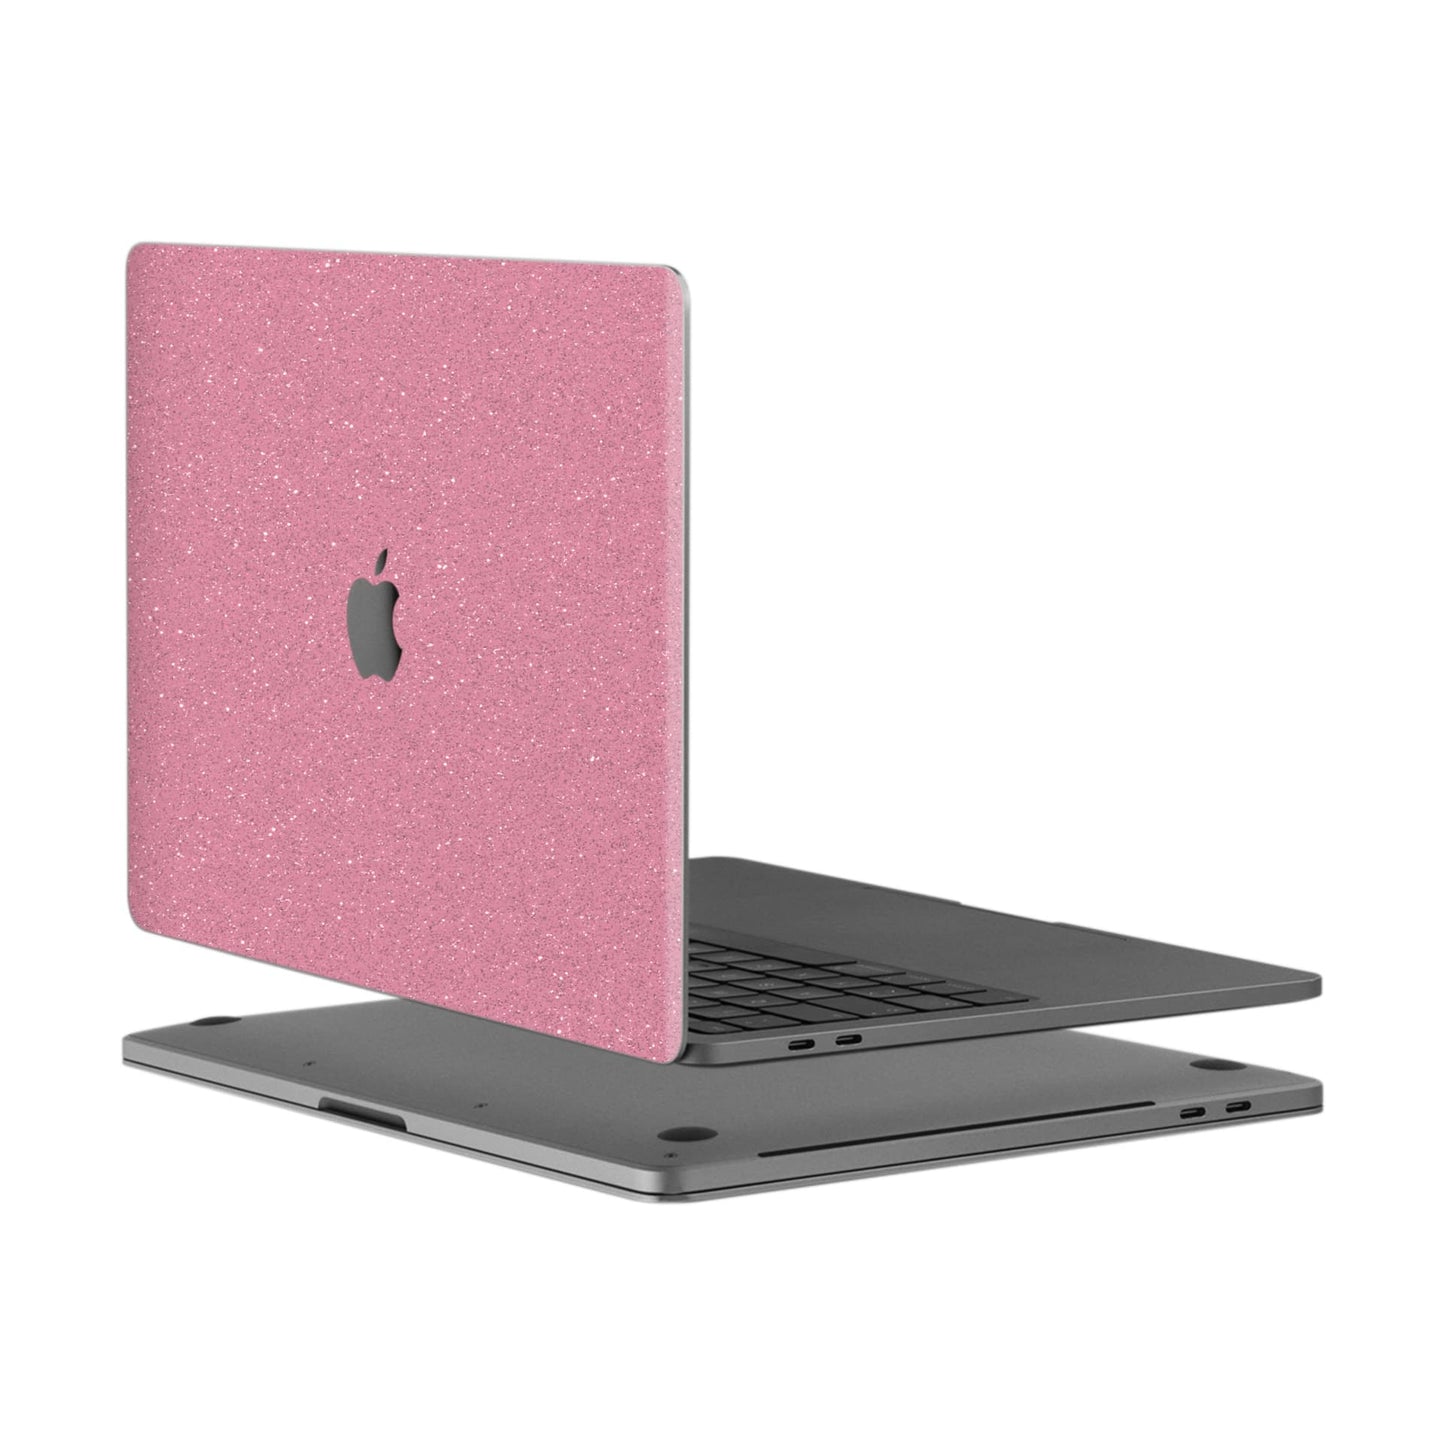 MacBook Pro 13", 4 Thunderbolt Ports (2020) - Diamond